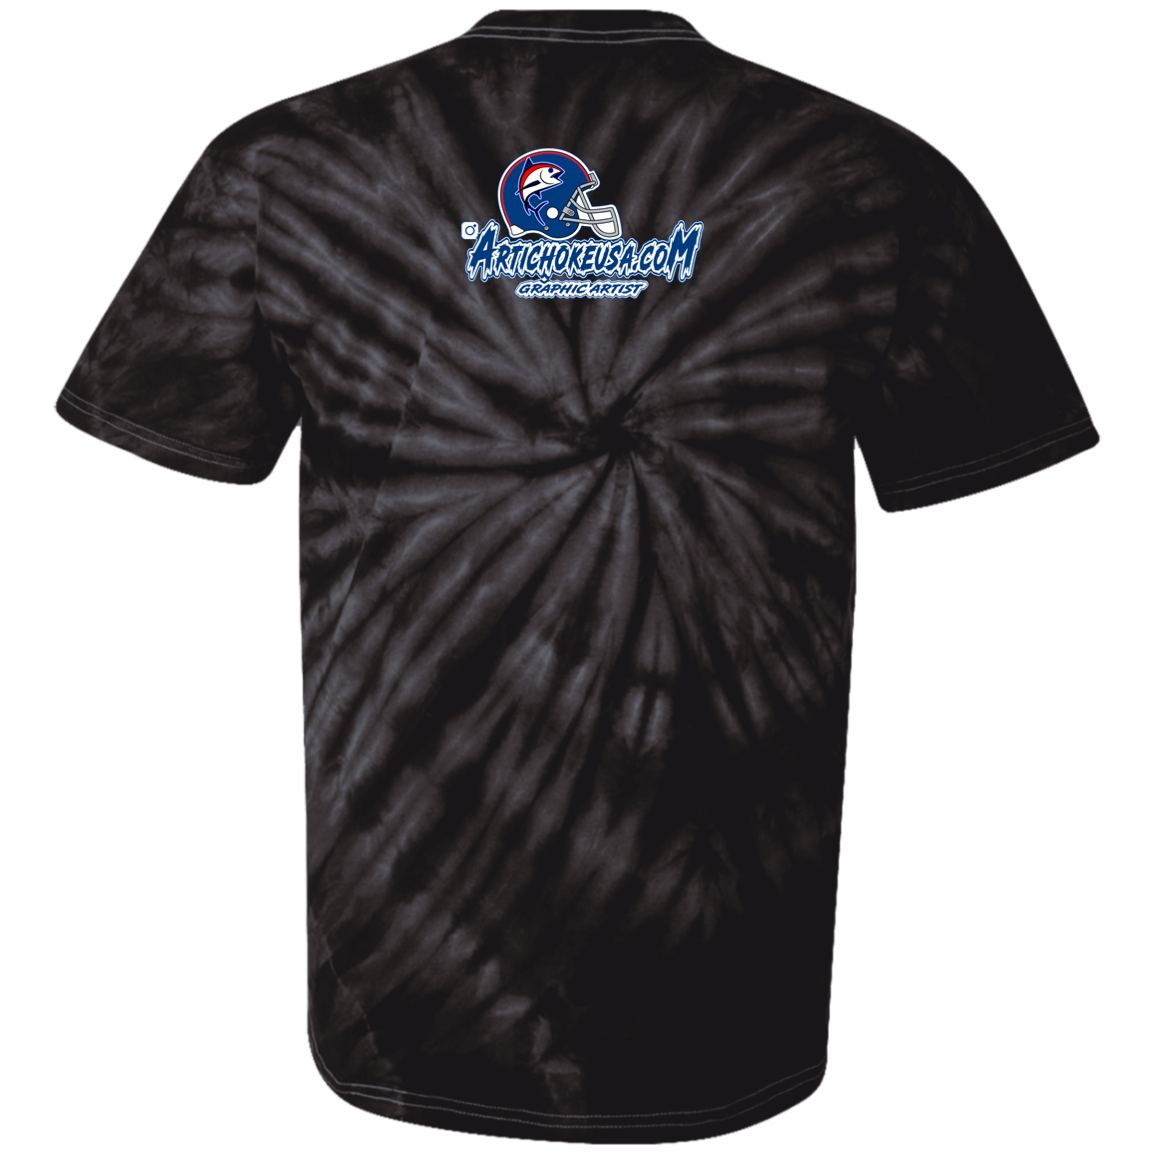 ArtichokeUSA Custom Design. The Big Tuna. Bill Parcell Tribute. NY Giants Fan Art. 100% Cotton Tie Dye T-Shirt